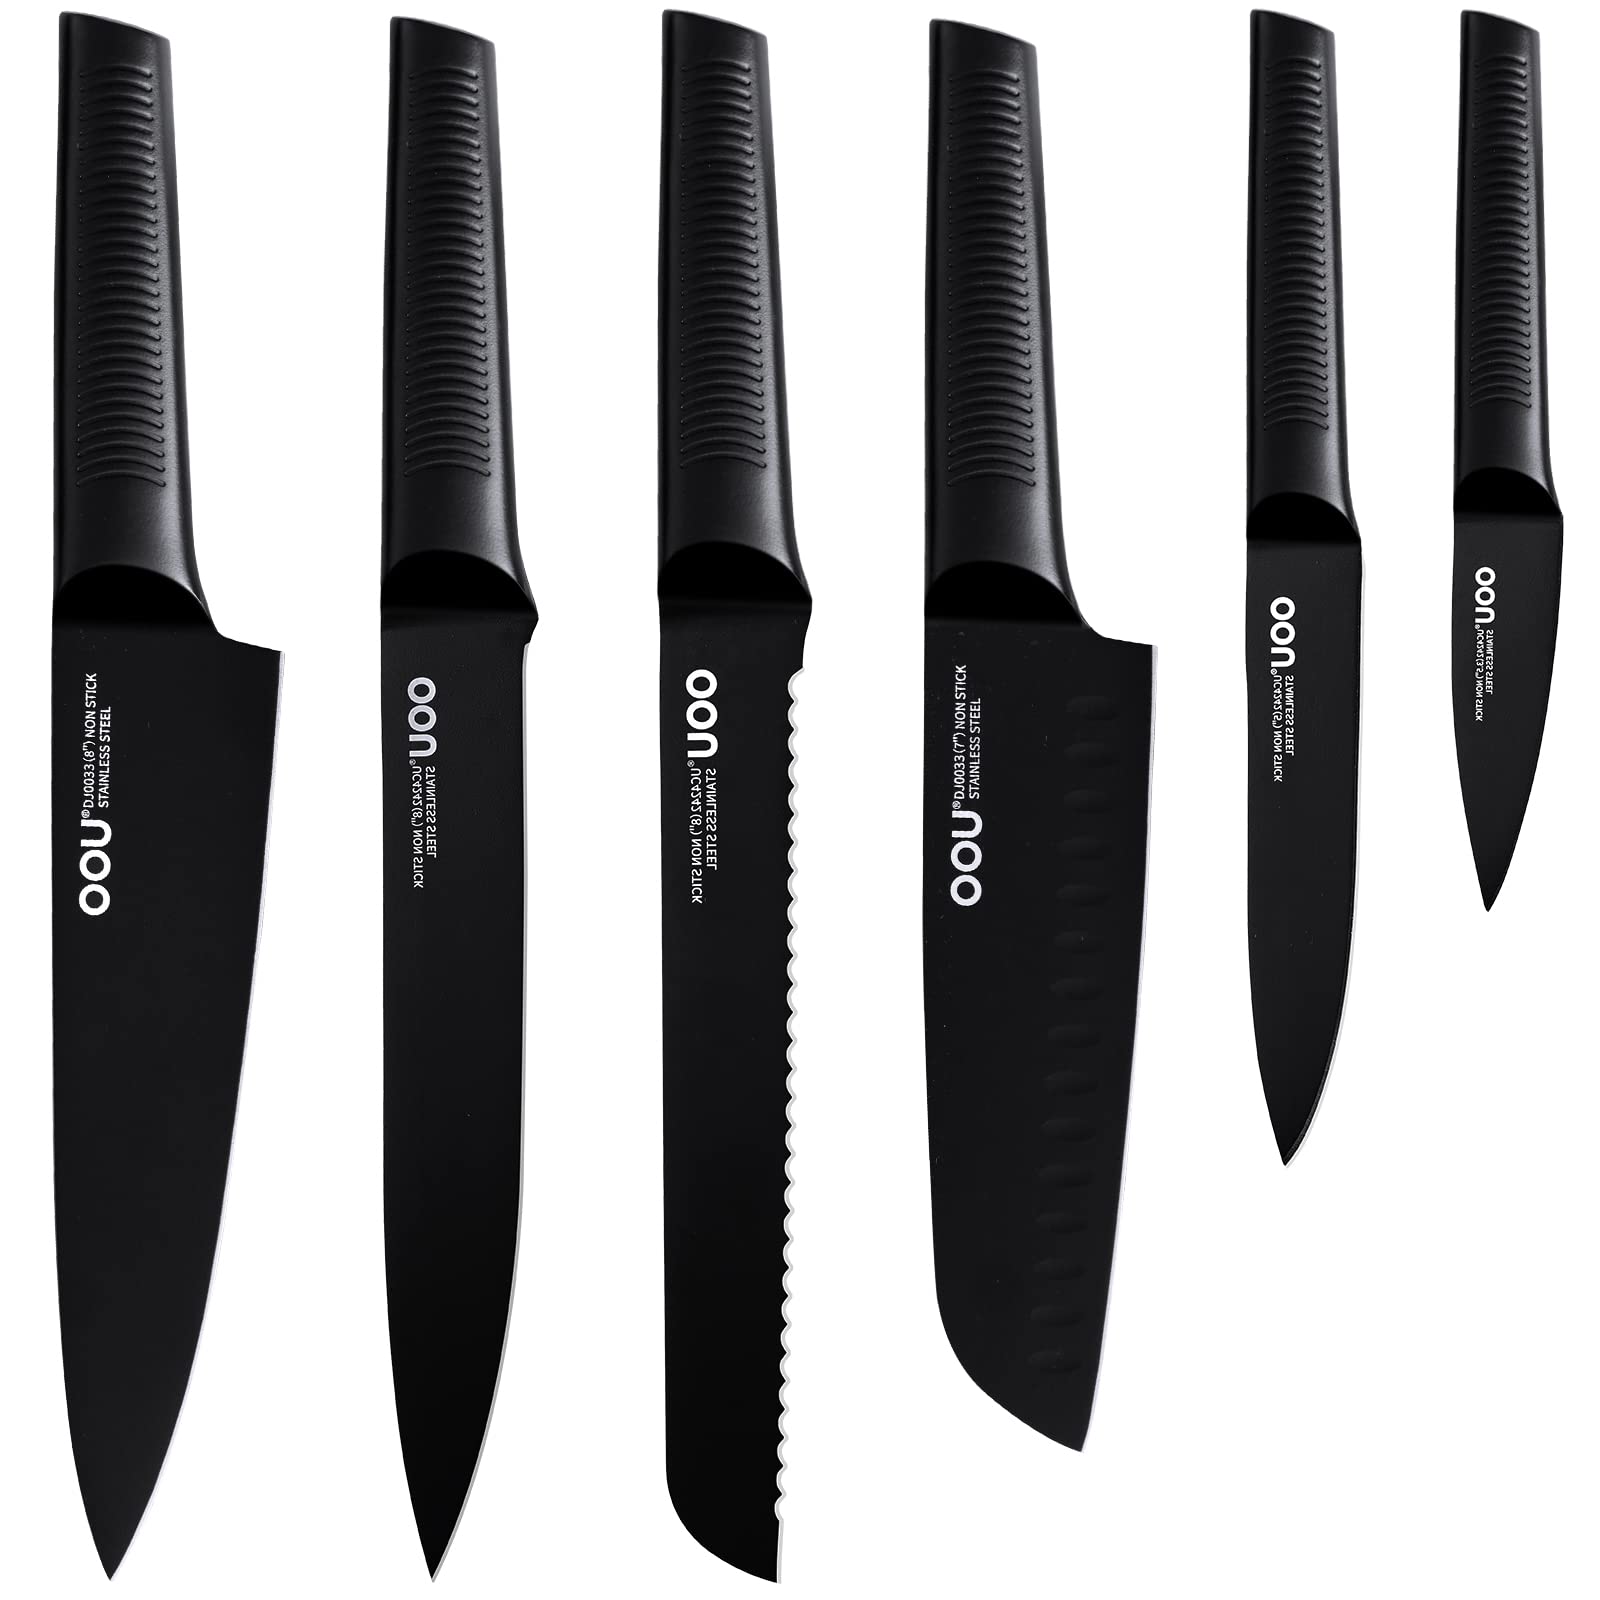 OOU Black Shark 6 Piece Kitchen Anti-Rust Black Knives Set